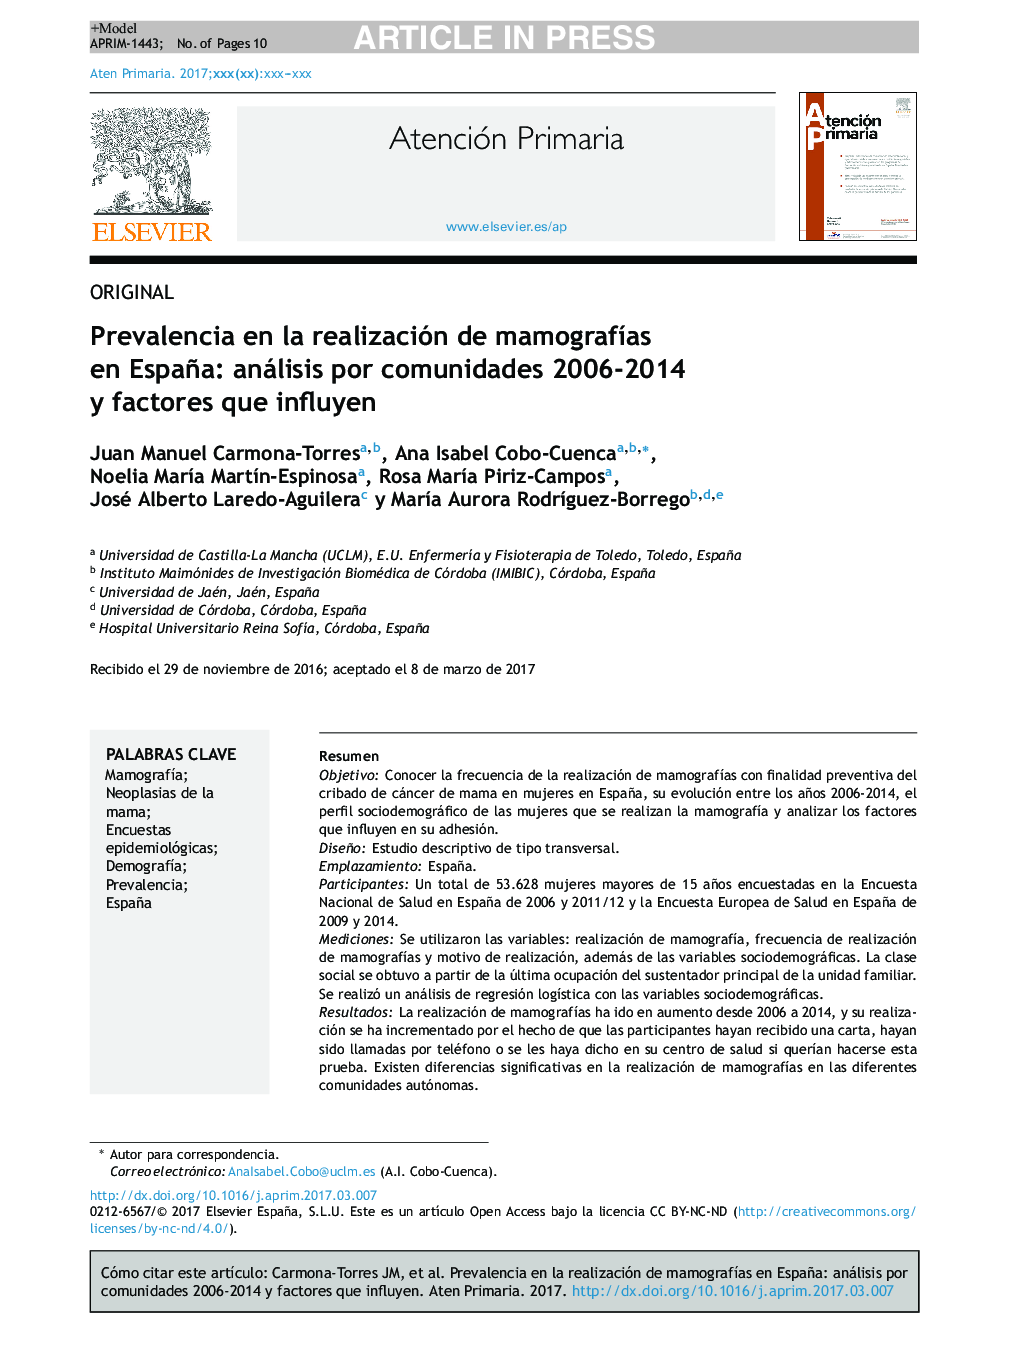 Prevalencia en la realización de mamografÃ­as en España: análisis por comunidades 2006-2014 y factores que influyen